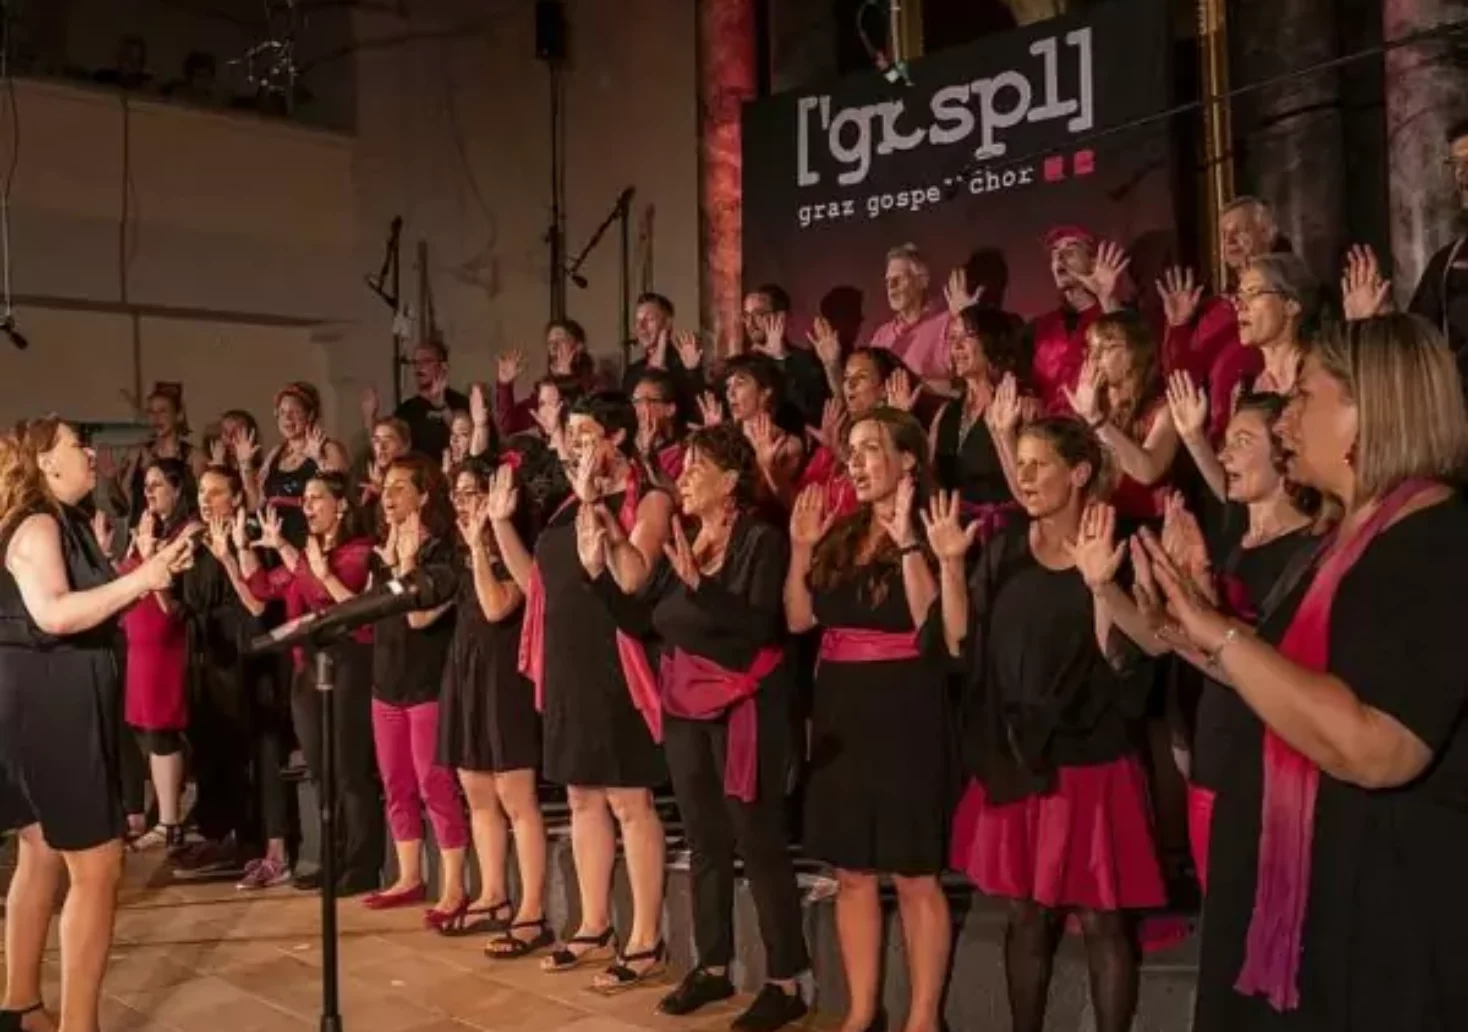 The photo on the 5min.at website shows the Graz Gospel Choir.